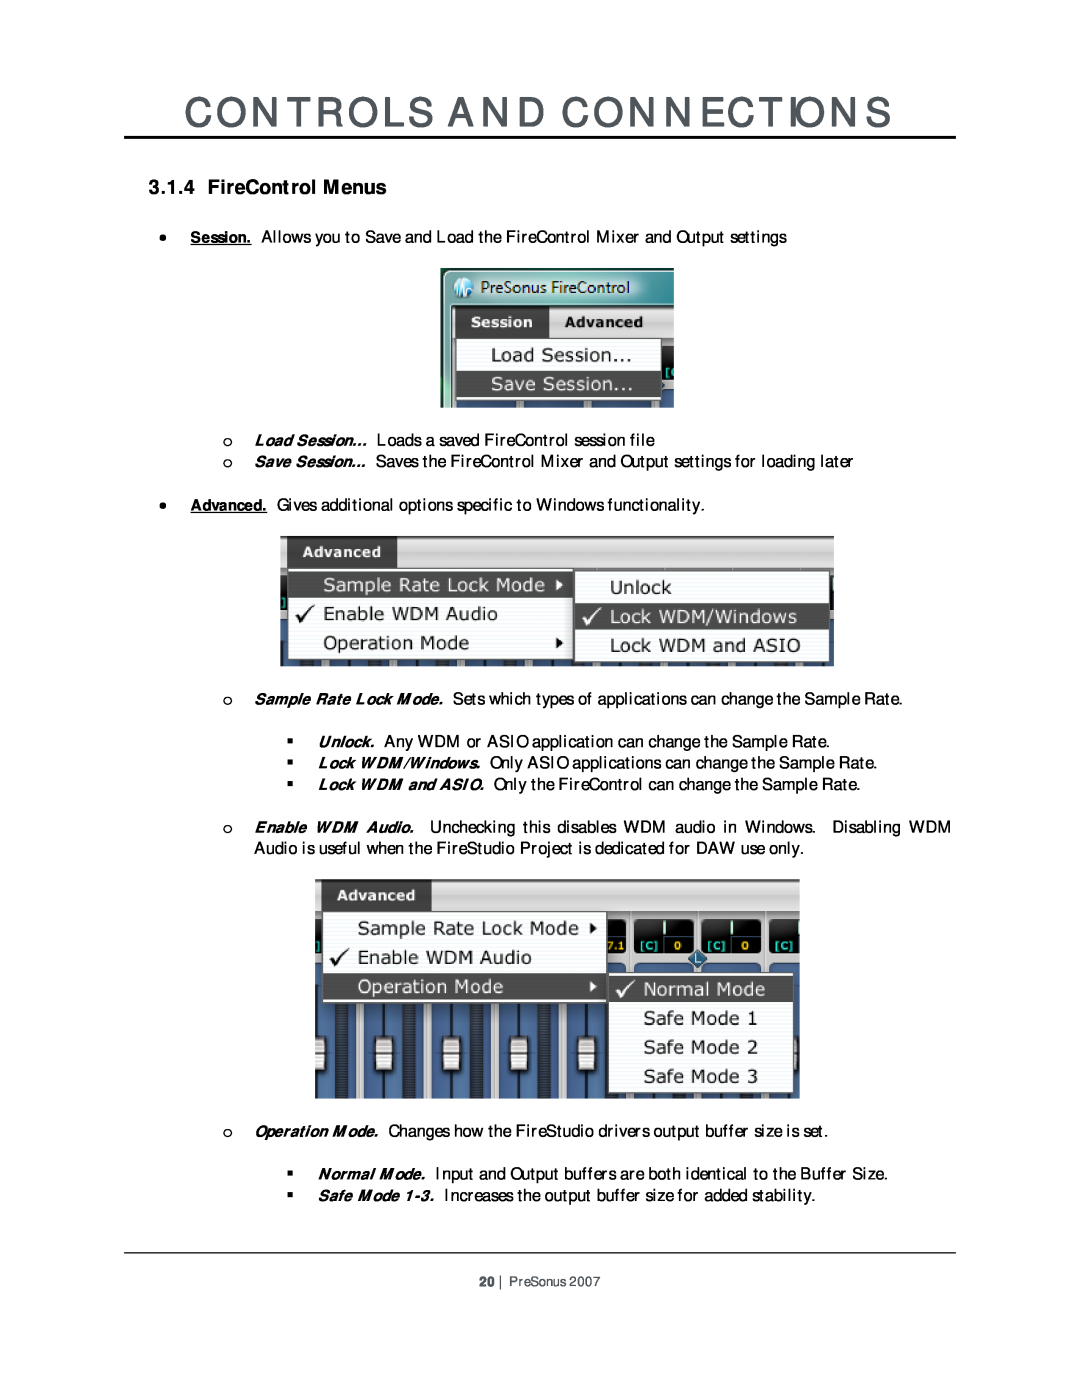 Presonus Audio electronic Version 1.0 user manual FireControl Menus, Controls And Connections, PreSonus 